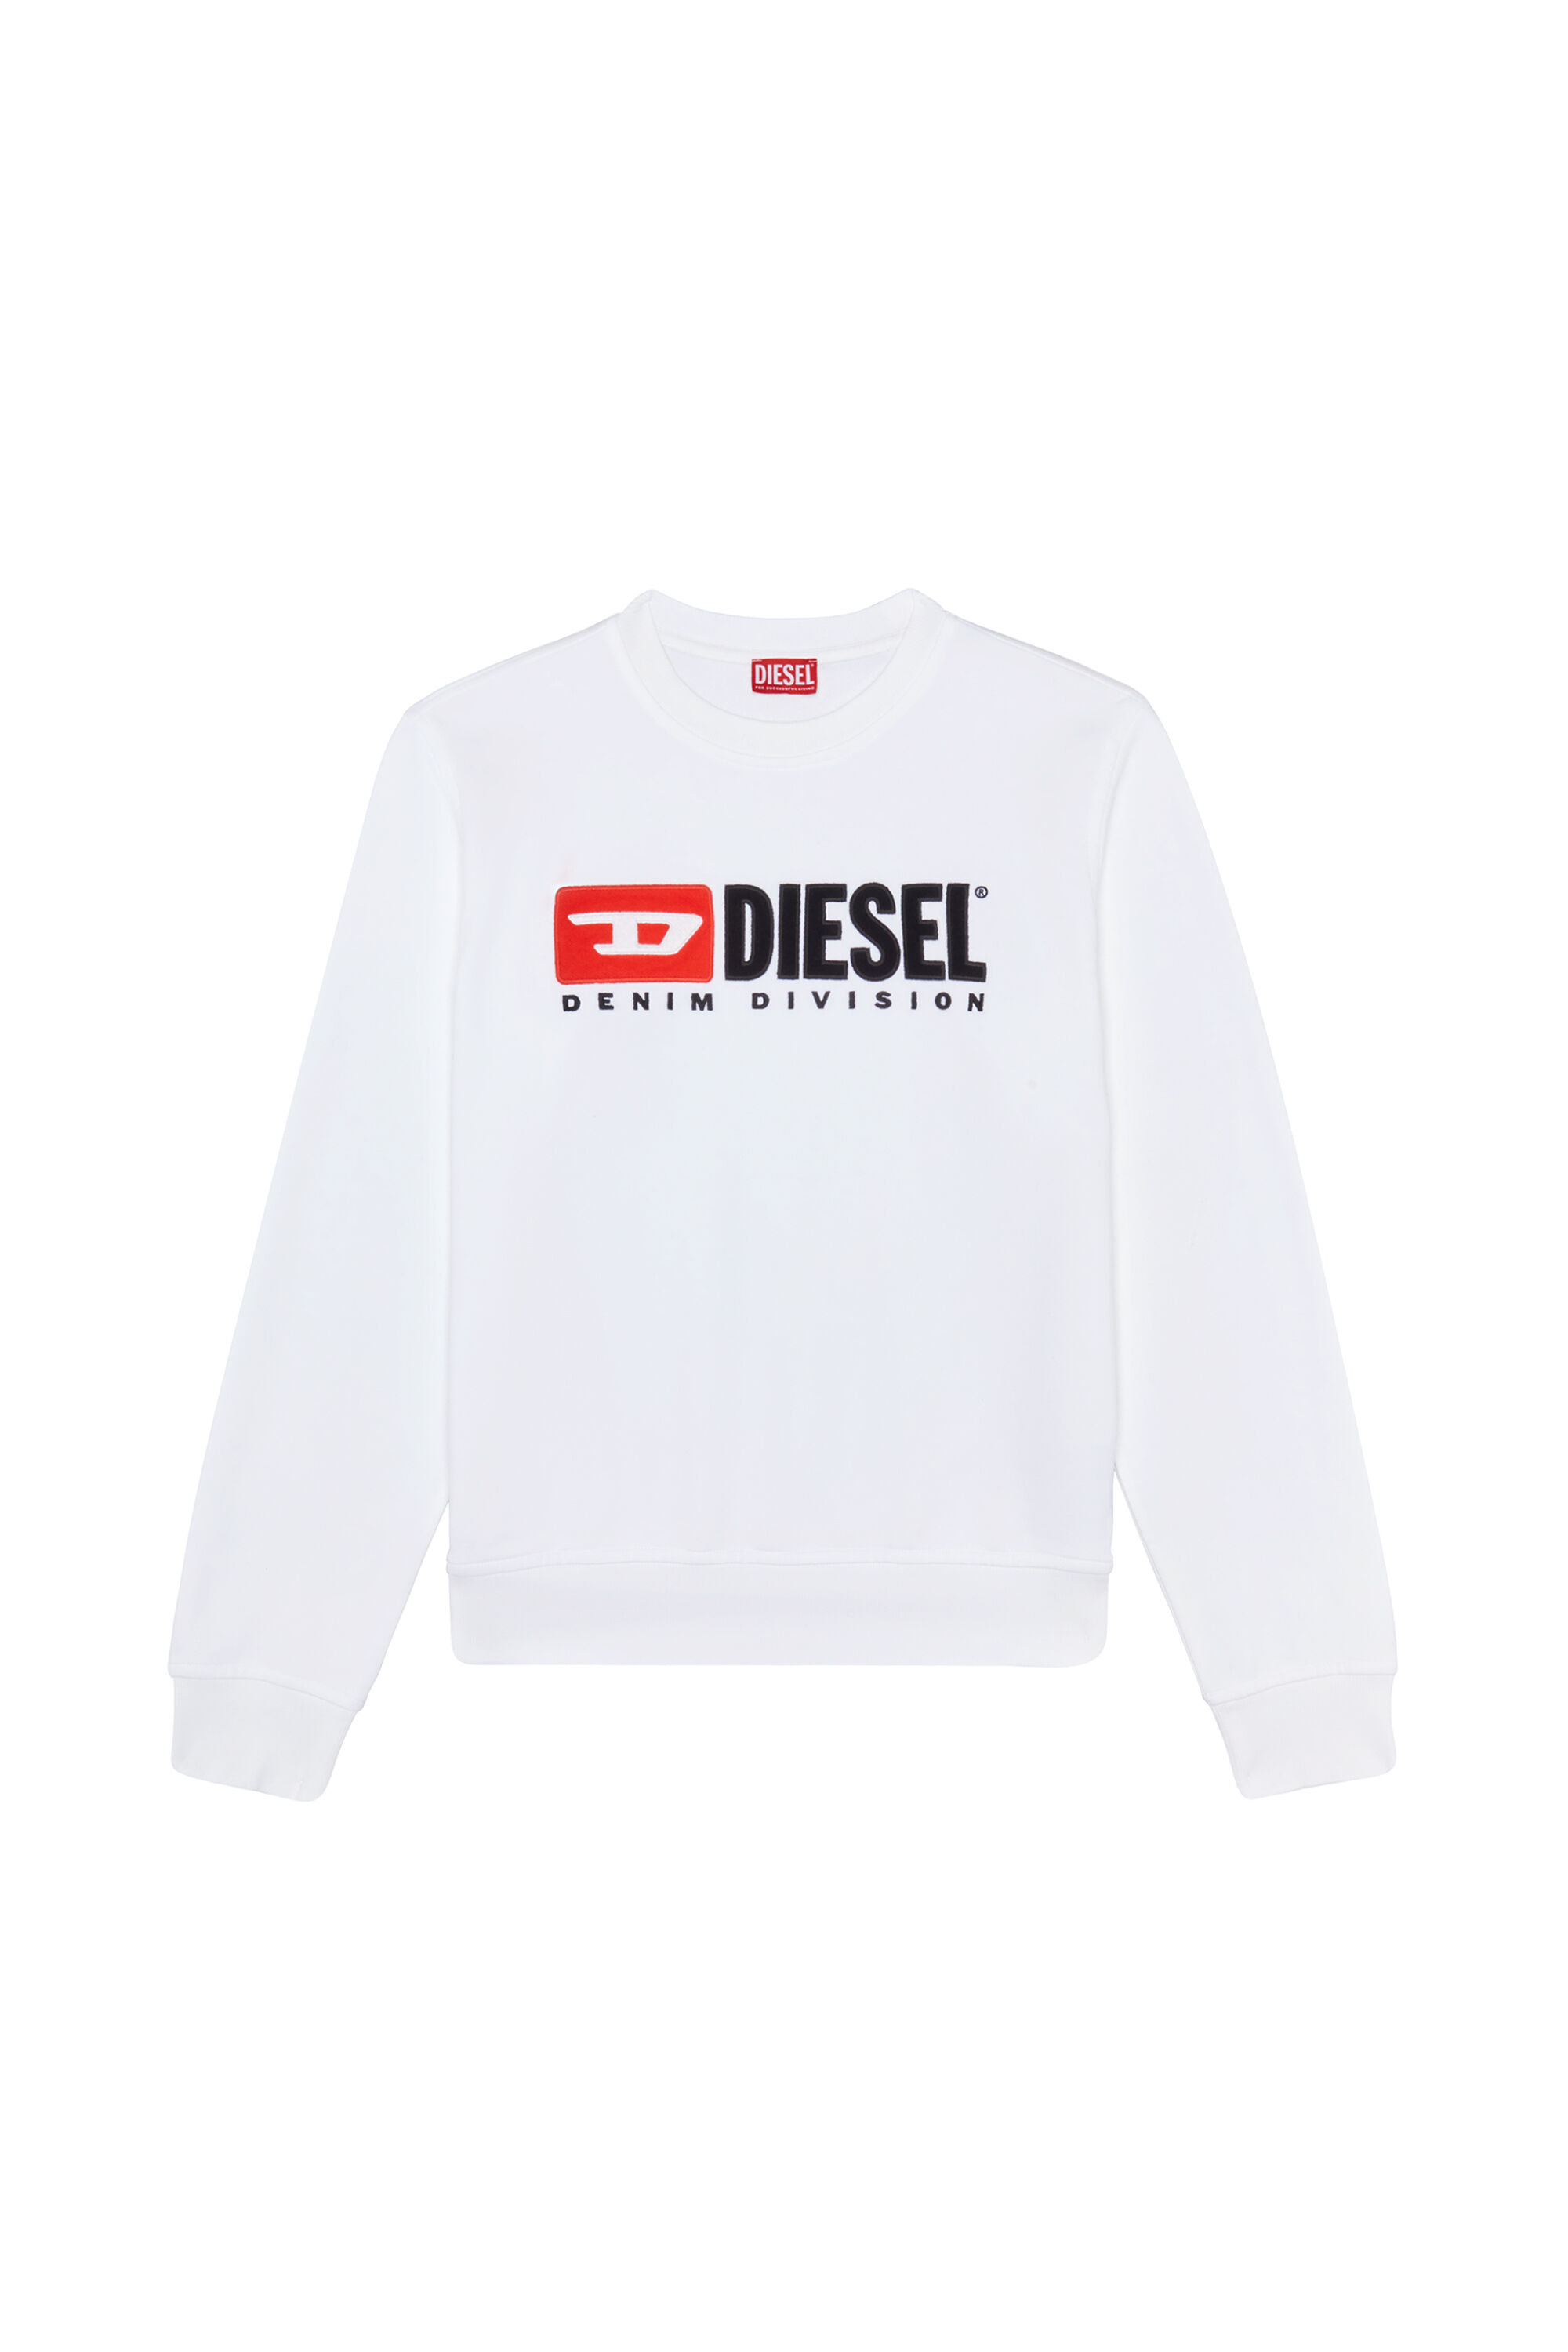 Diesel - S-GINN-DIV, Bianco - Image 2